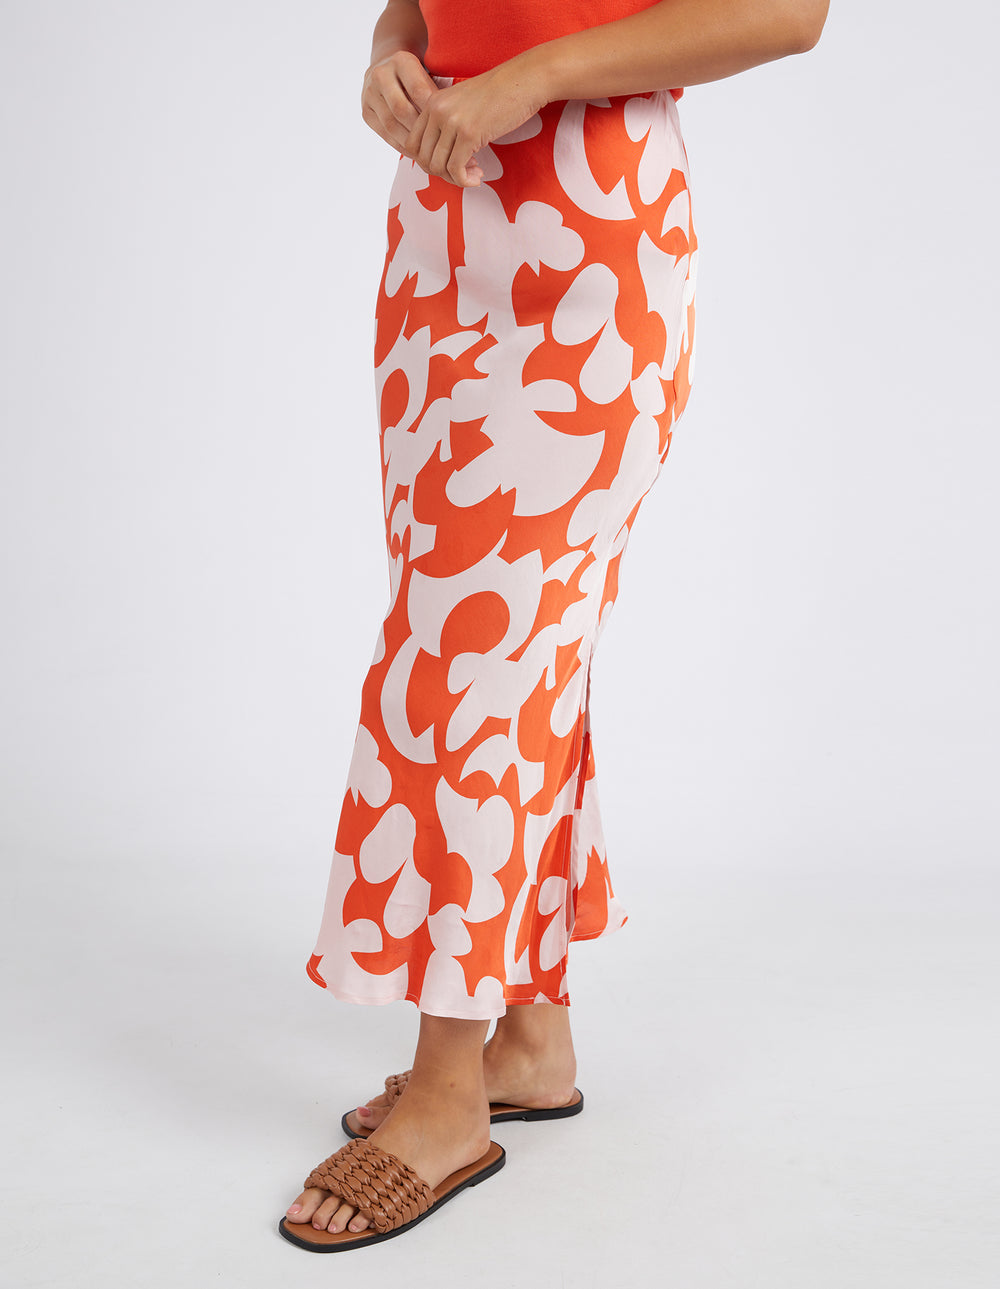 Foxwood - Calypso Skirt - Pink & Orange